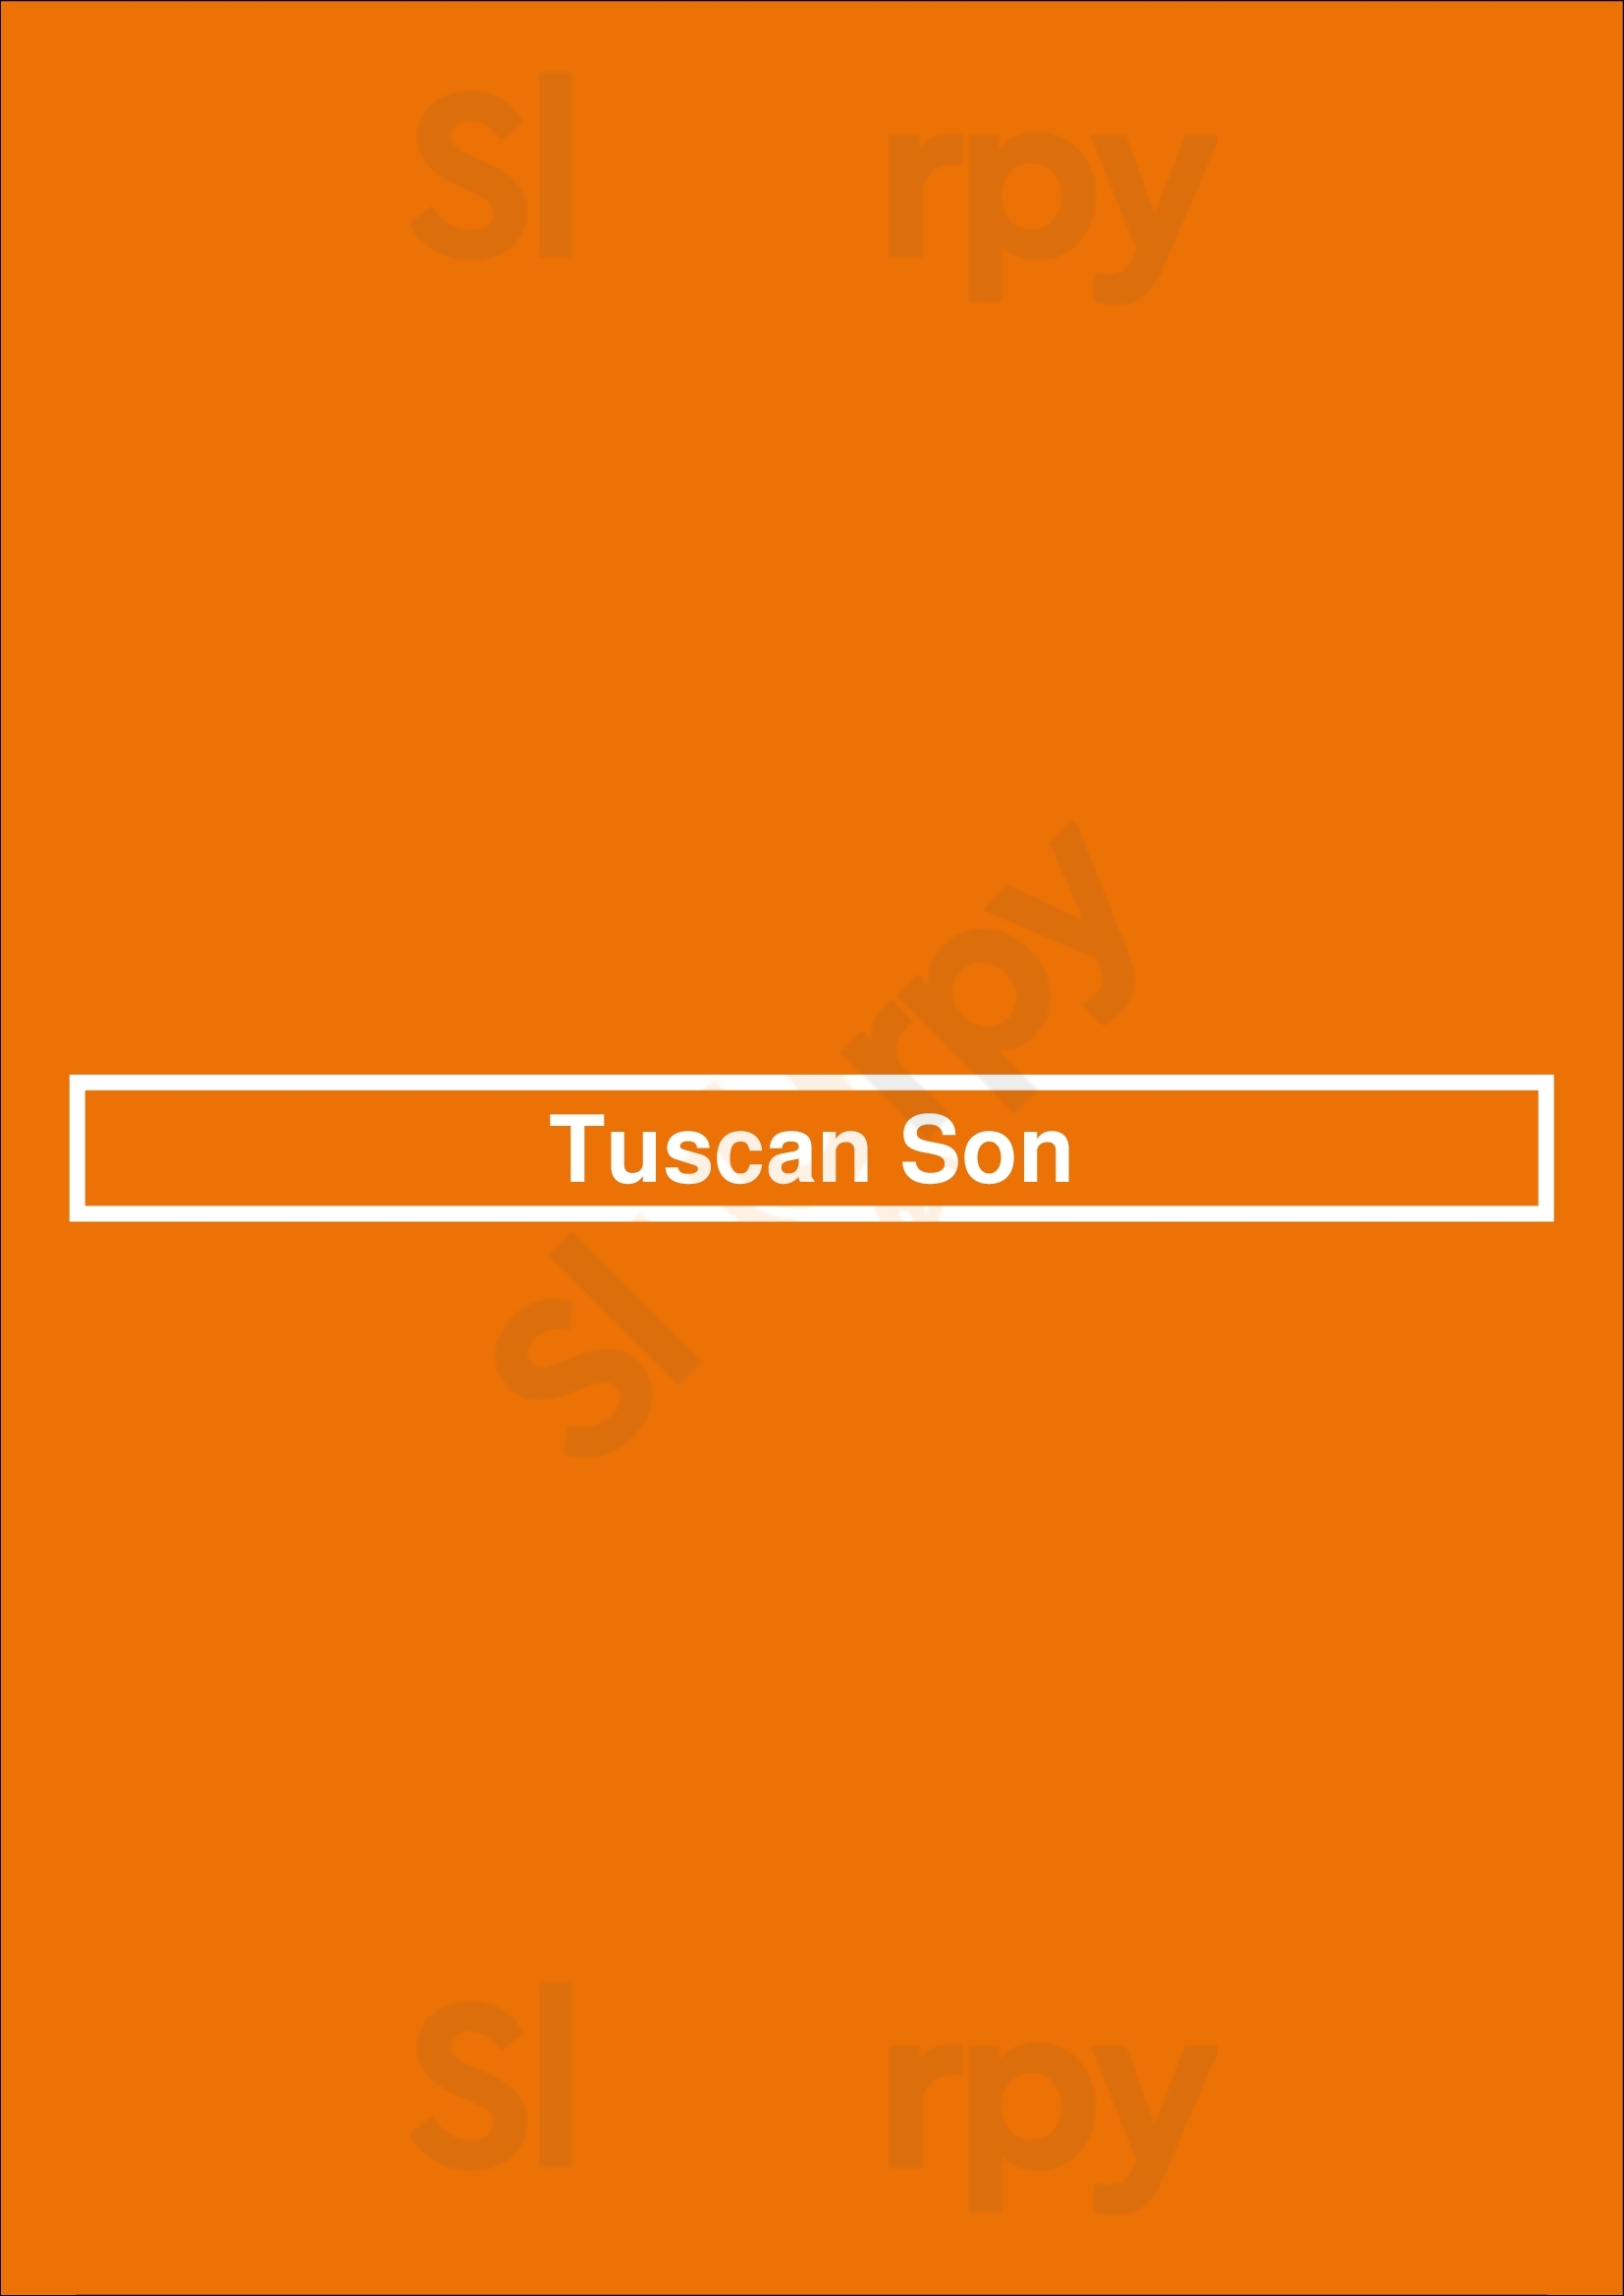 Tuscan Son Los Angeles Menu - 1